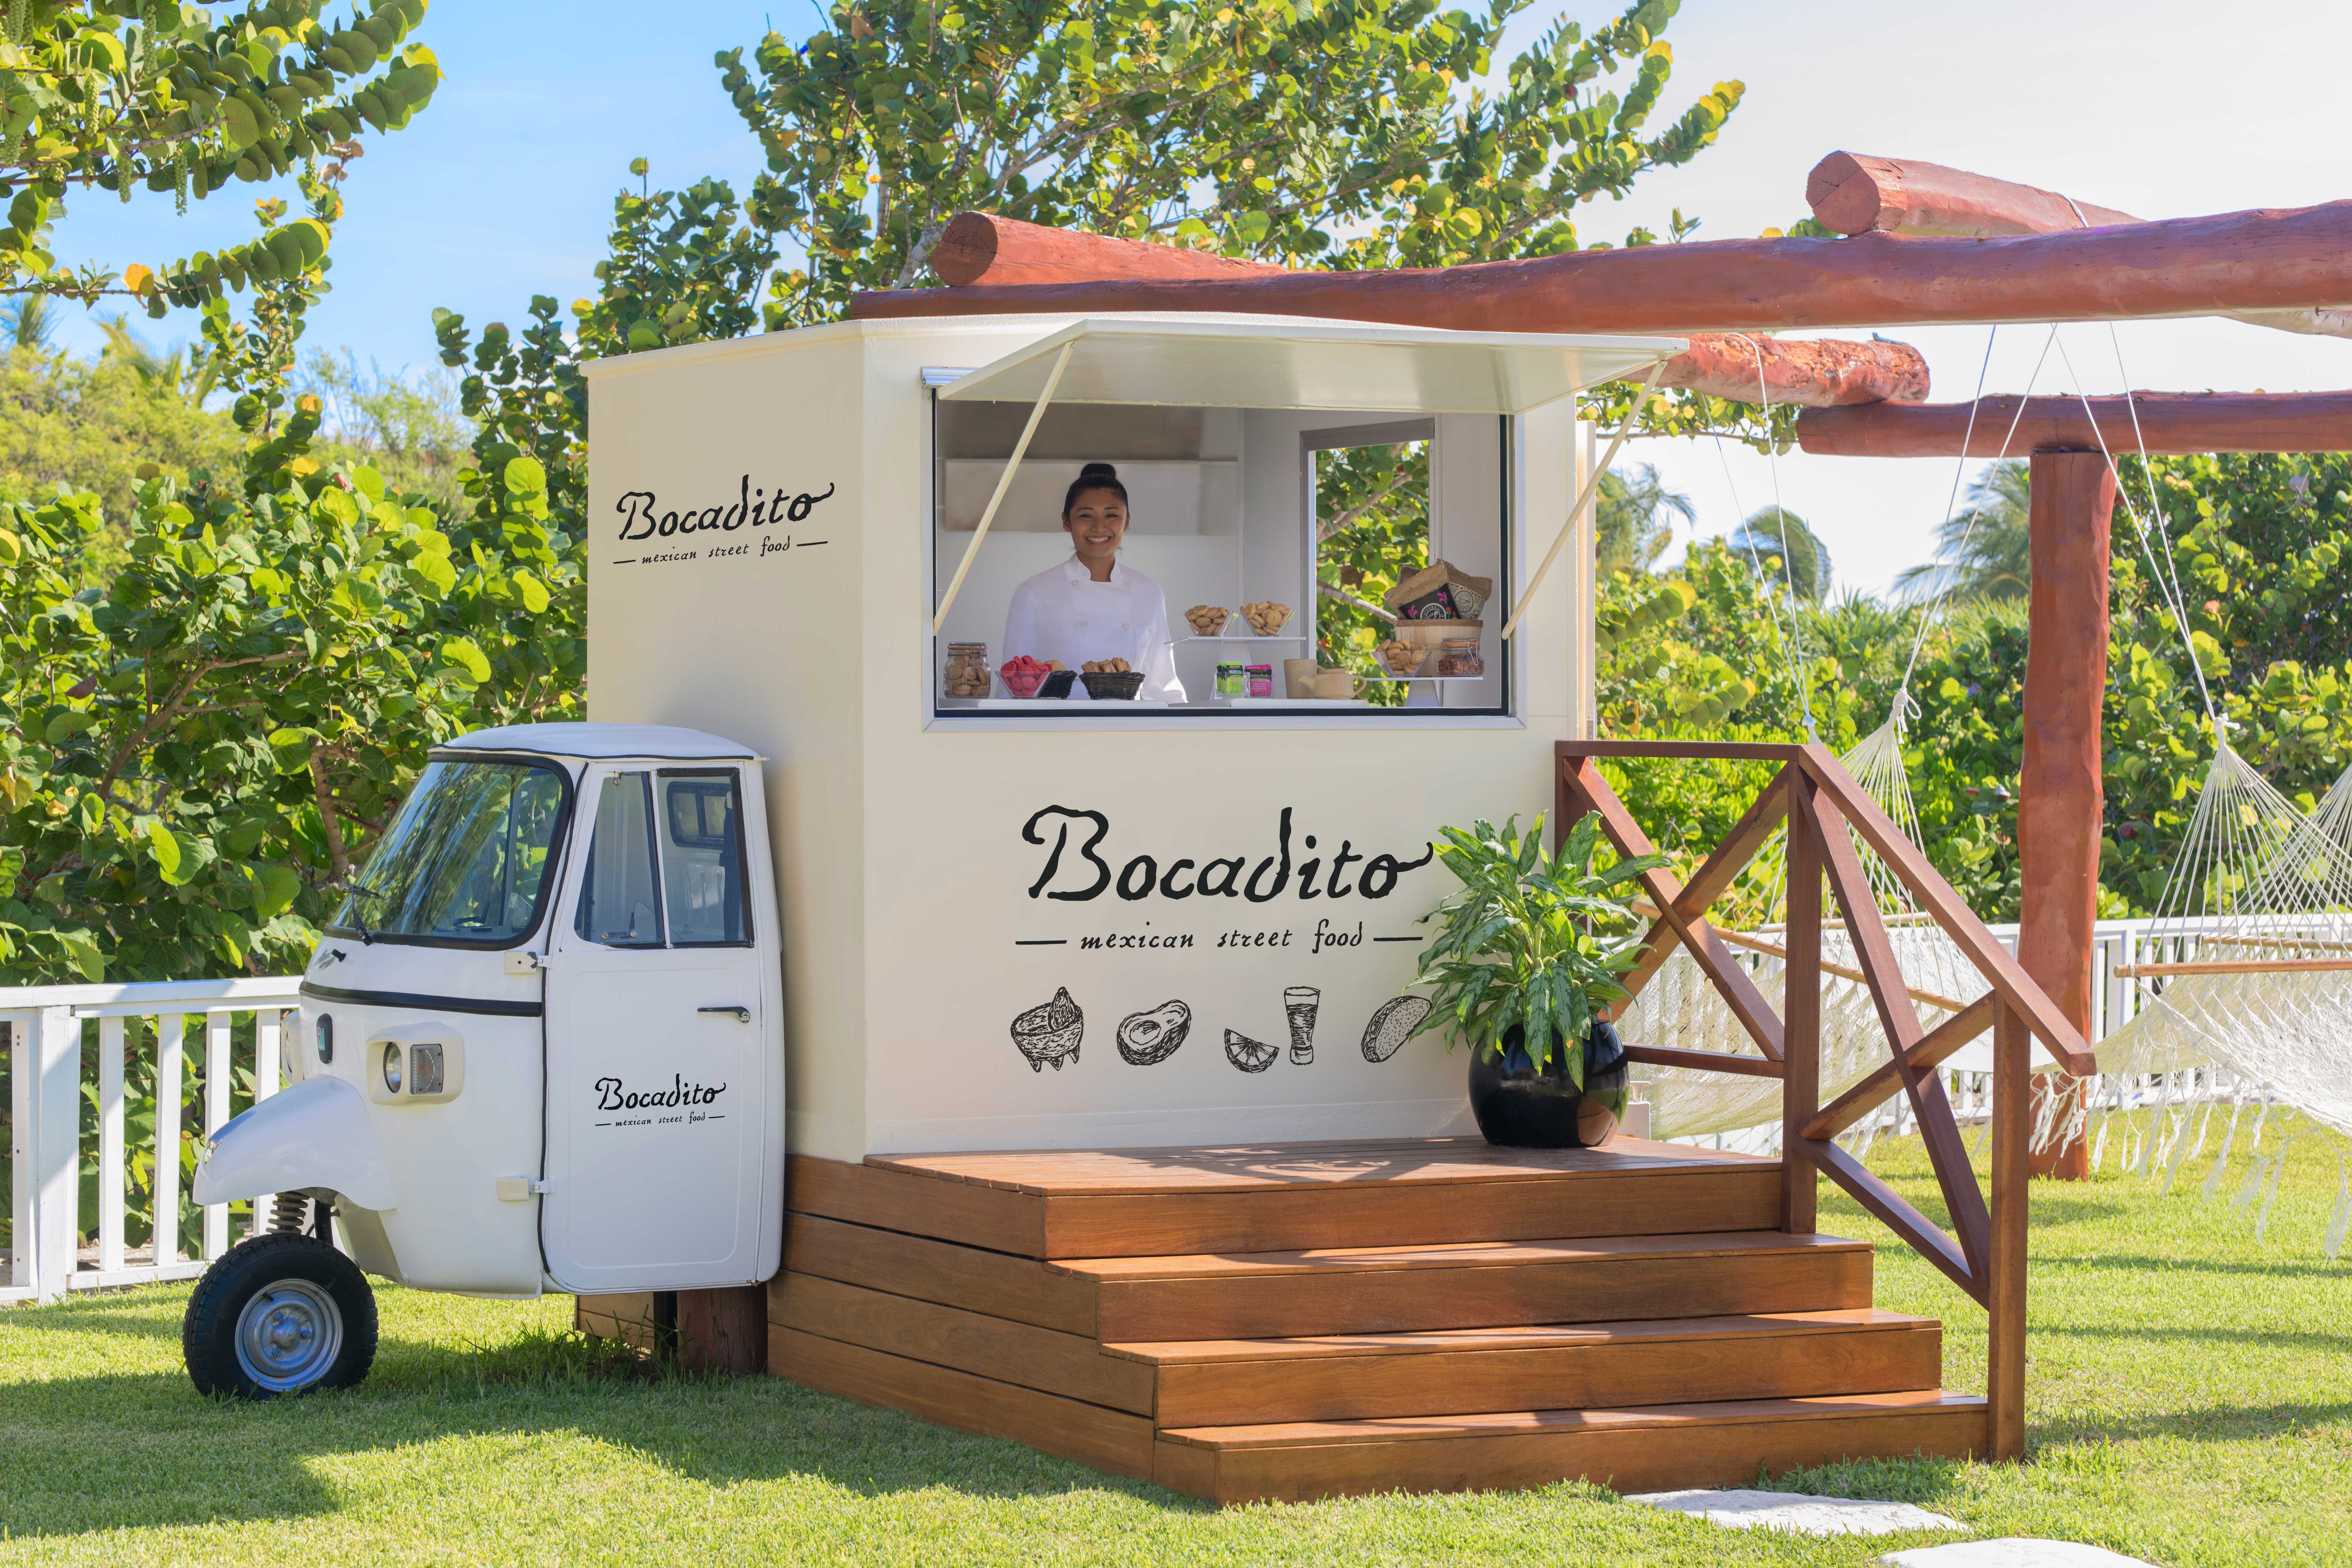 Visit our Bocadito food truck in Beloved Playa Mujeres